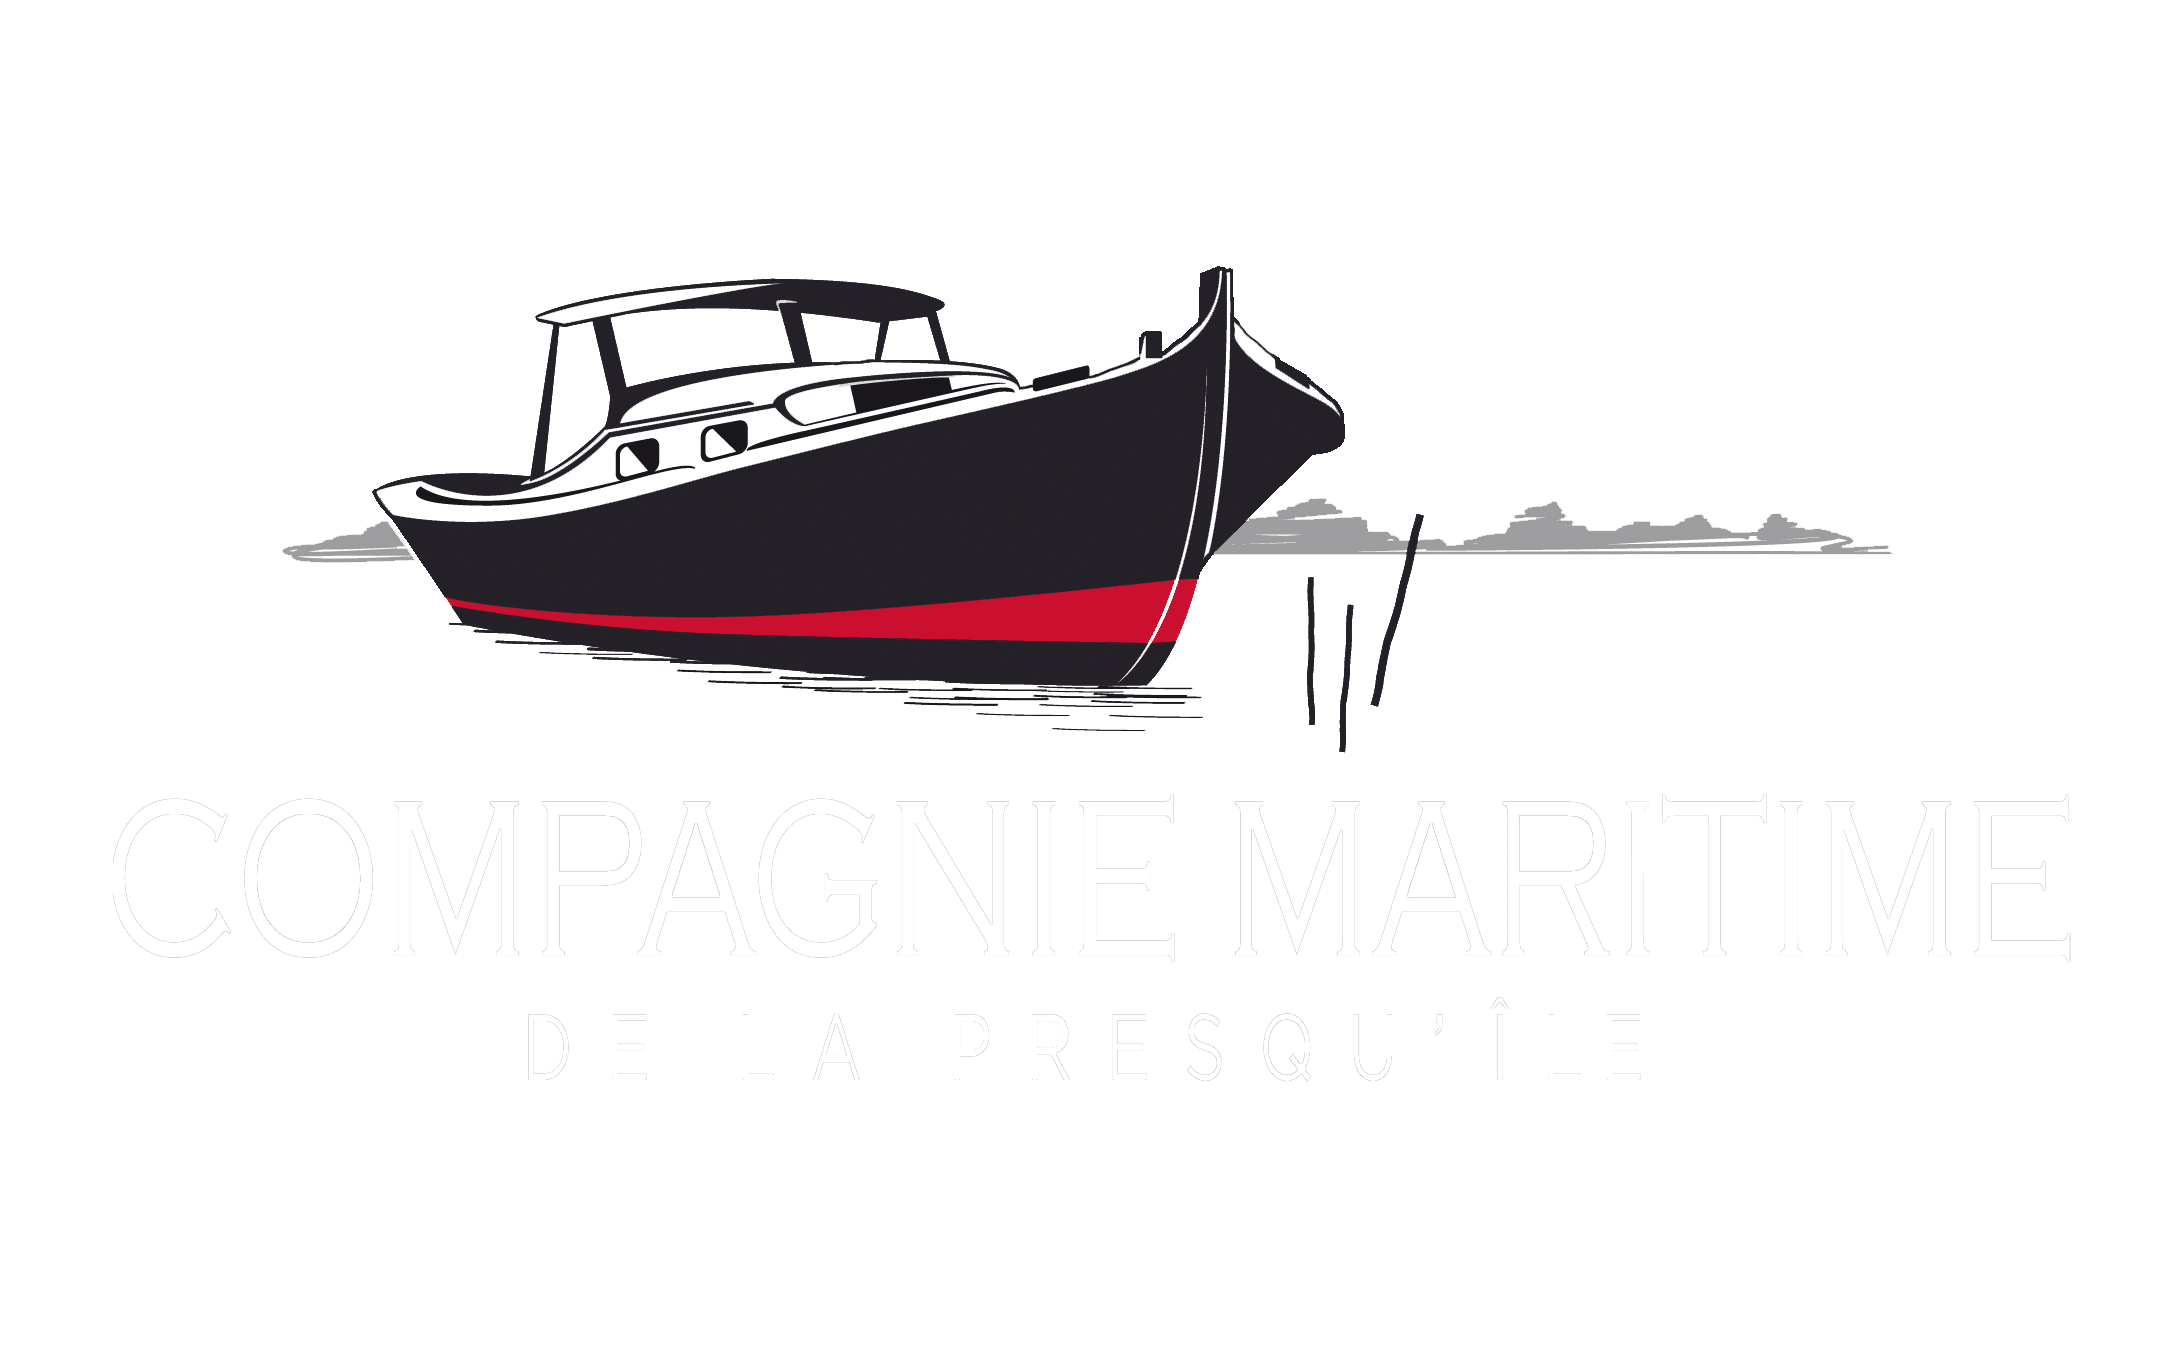 Compagnie Maritime de la Presqu'ile